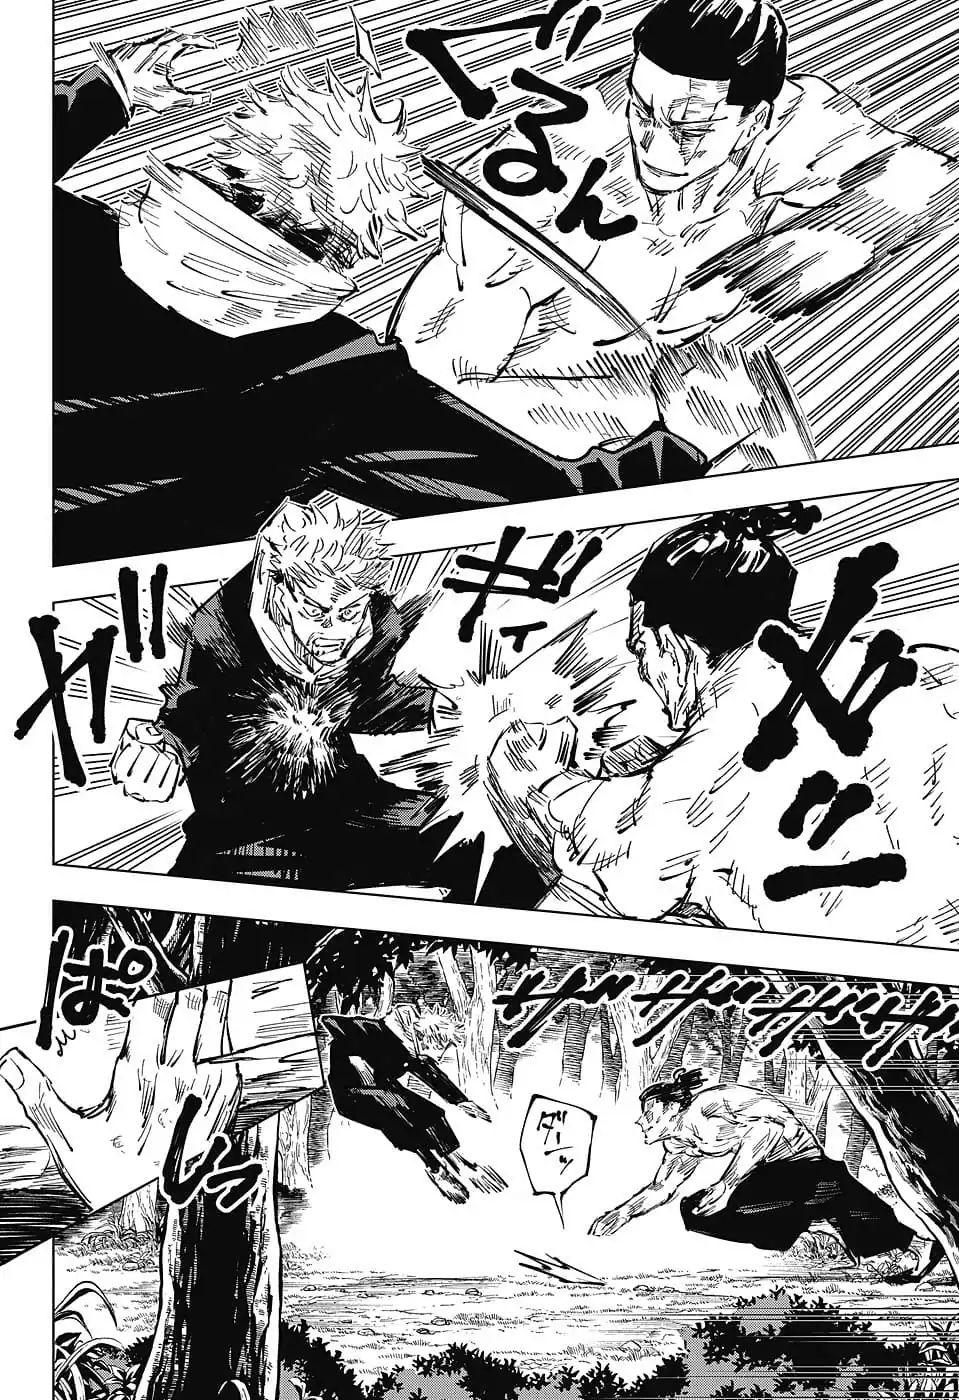 Jujutsu Kaisen Chapter 36: Exchange Festival With The Kyoto School - Team Battle 3 page 10 - Mangakakalot